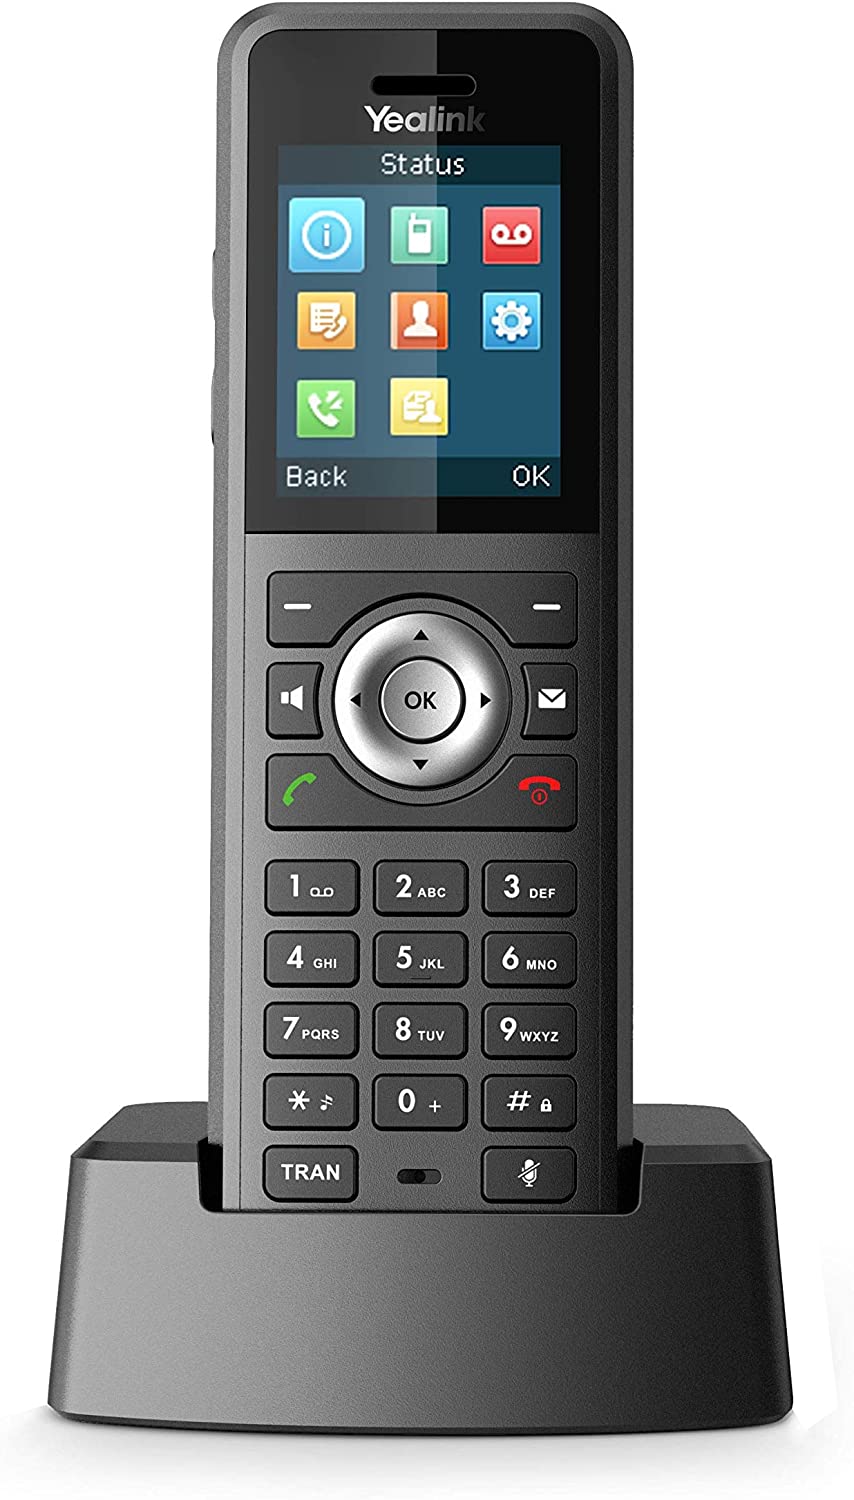 Yealink W59HVR Cordless Ruggedized DECT IP Phone - Black (New)